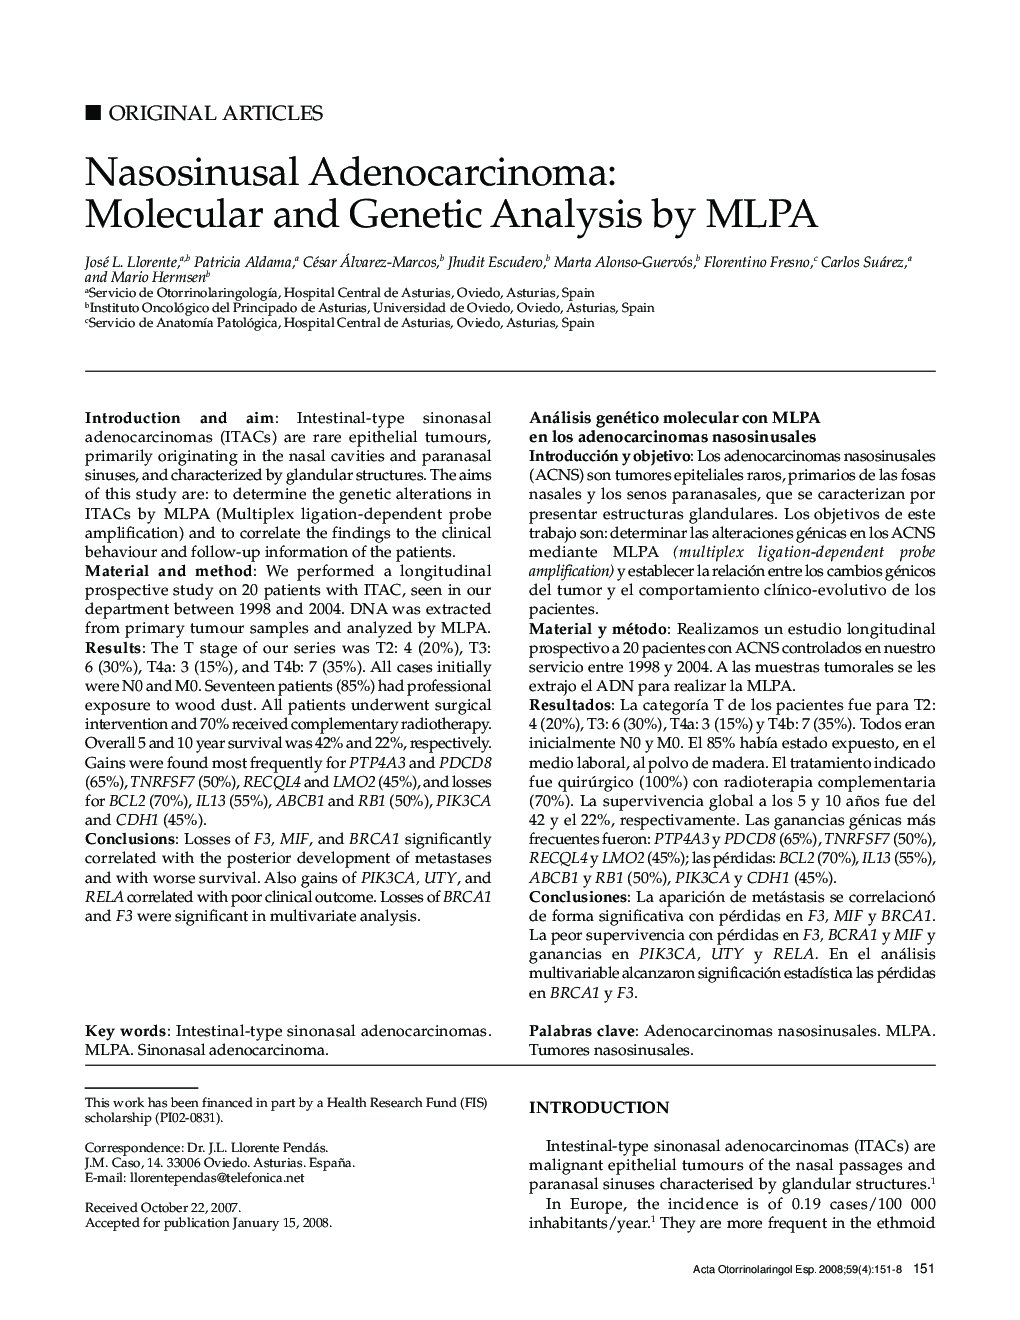 Nasosinusal Adenocarcinoma: Molecular and Genetic Analysis by MLPA